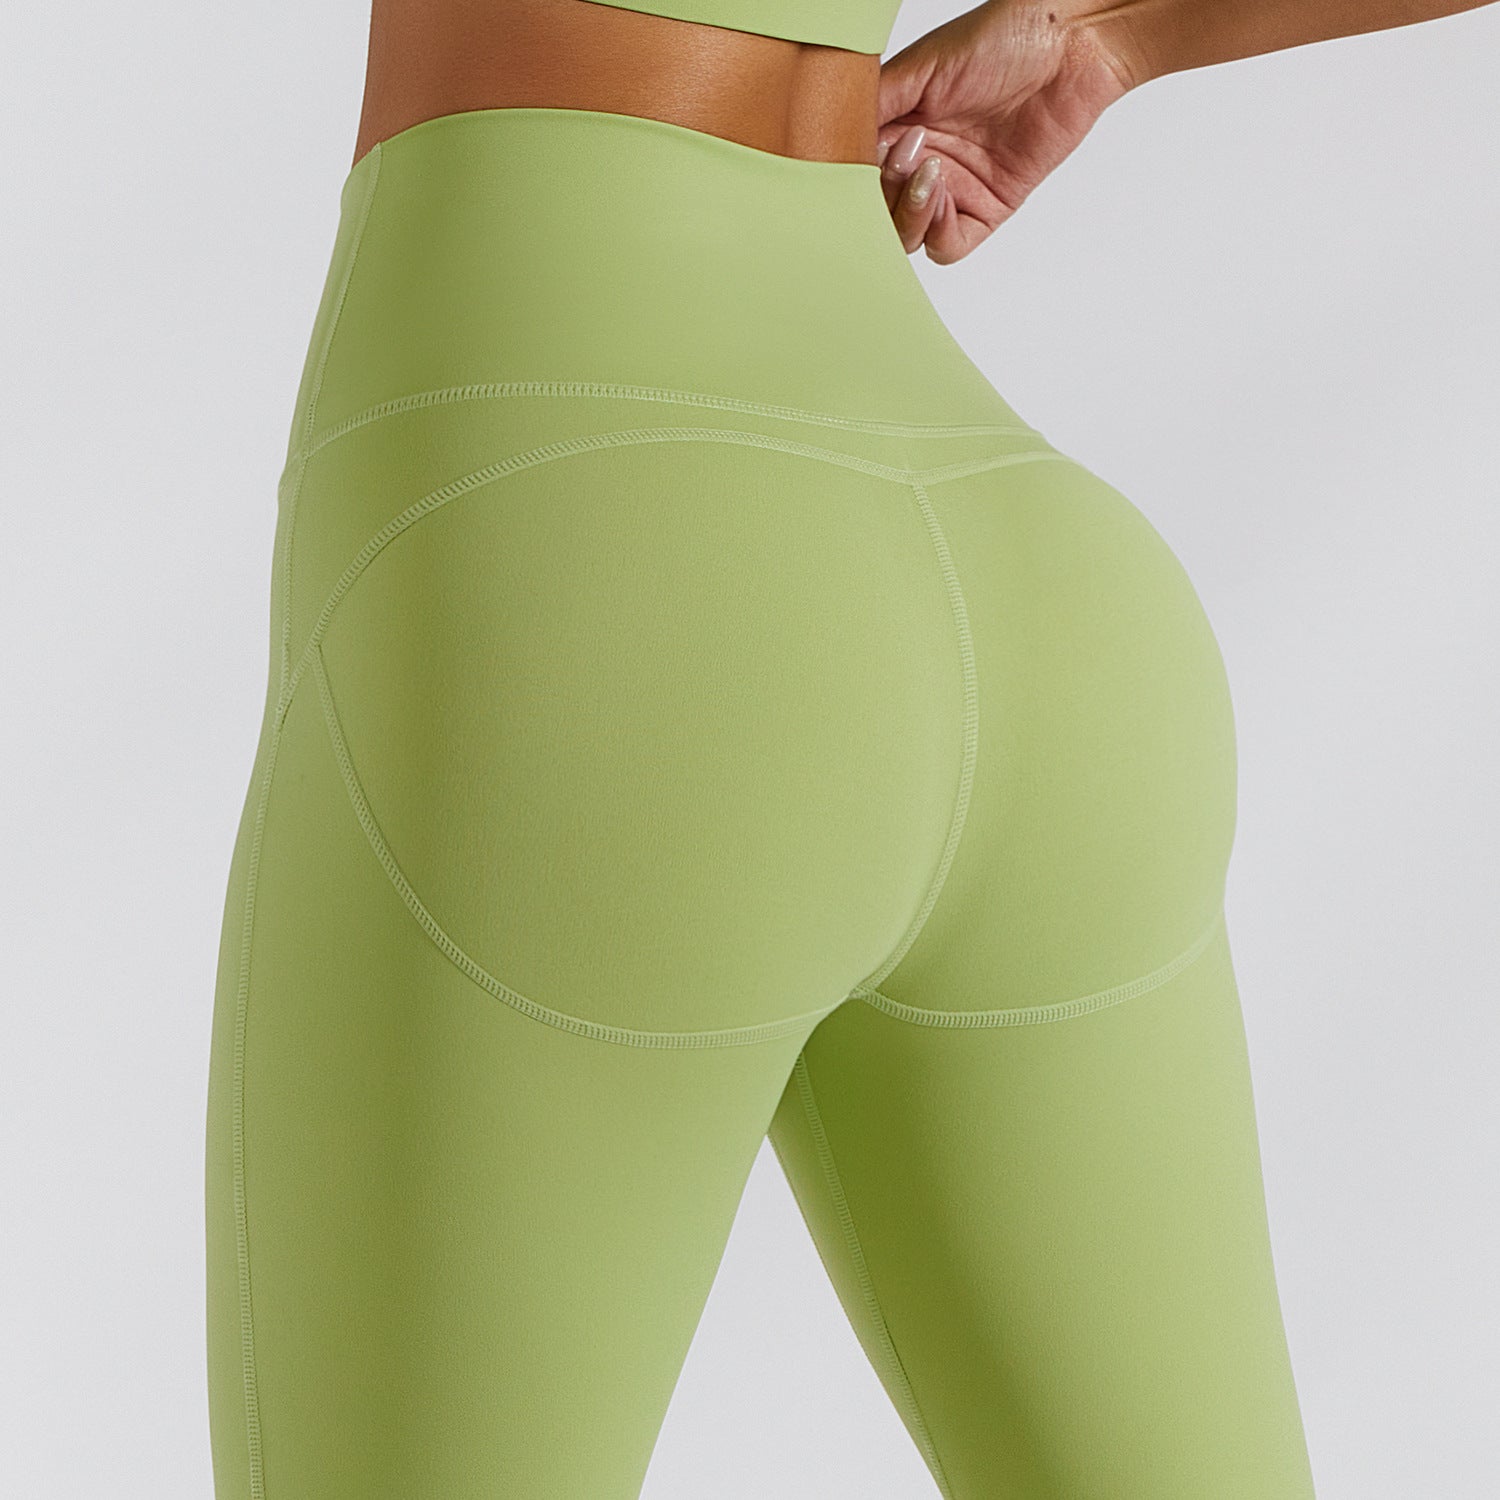 New Pilates Outwear Yoga Pants Cycling Sports Pants High Waist Slim Hip Lifting Running Tights